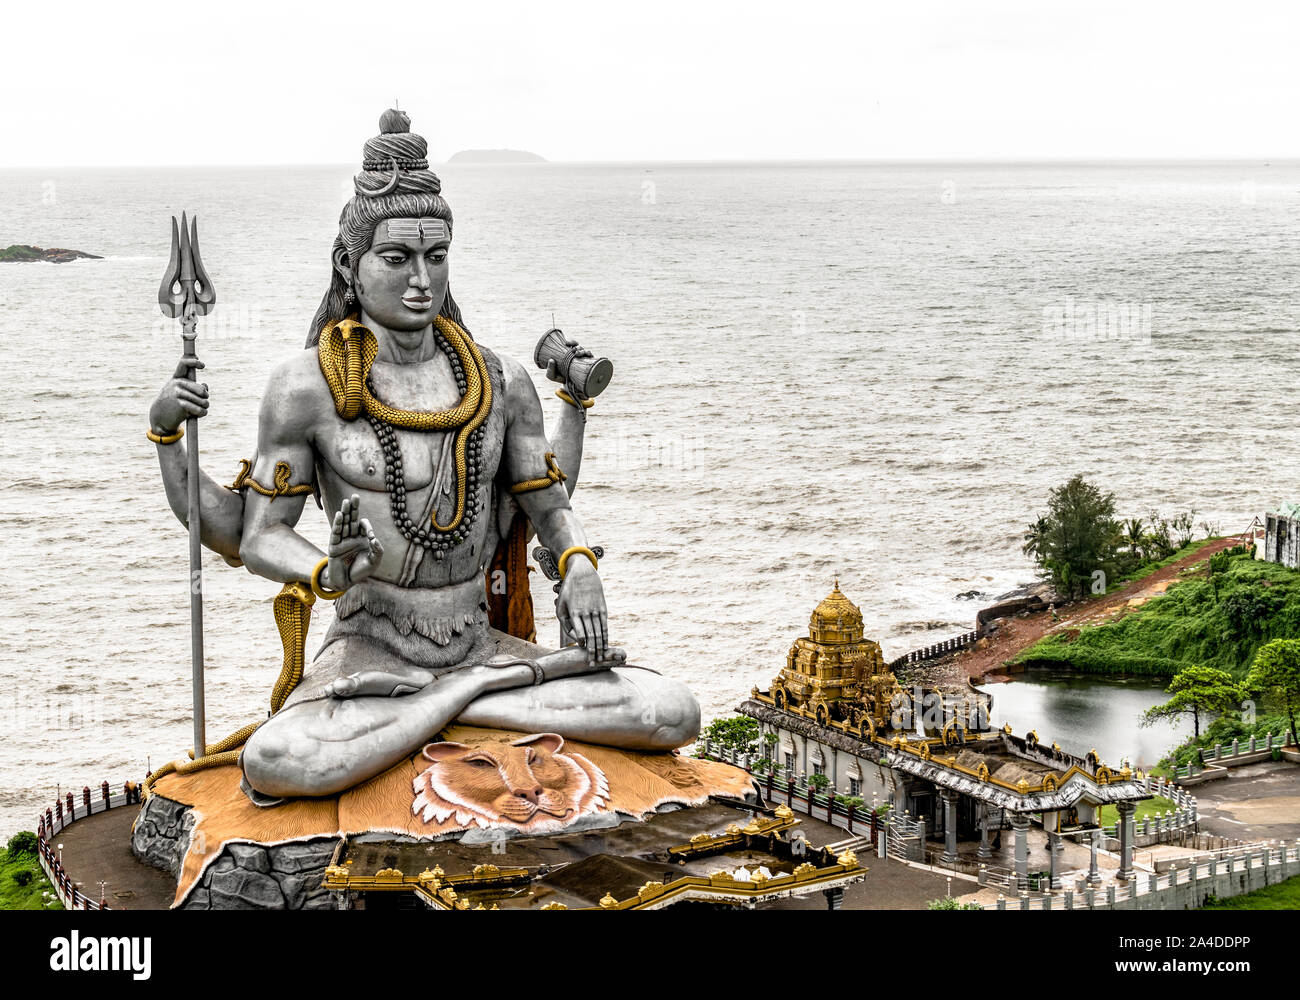 Statue of Hindu mythology God Shiva in Murdeshwar, Karnataka. This 123 feet statue is situated on Arabian sea Coast and is His second tallest statue. Stock Photo